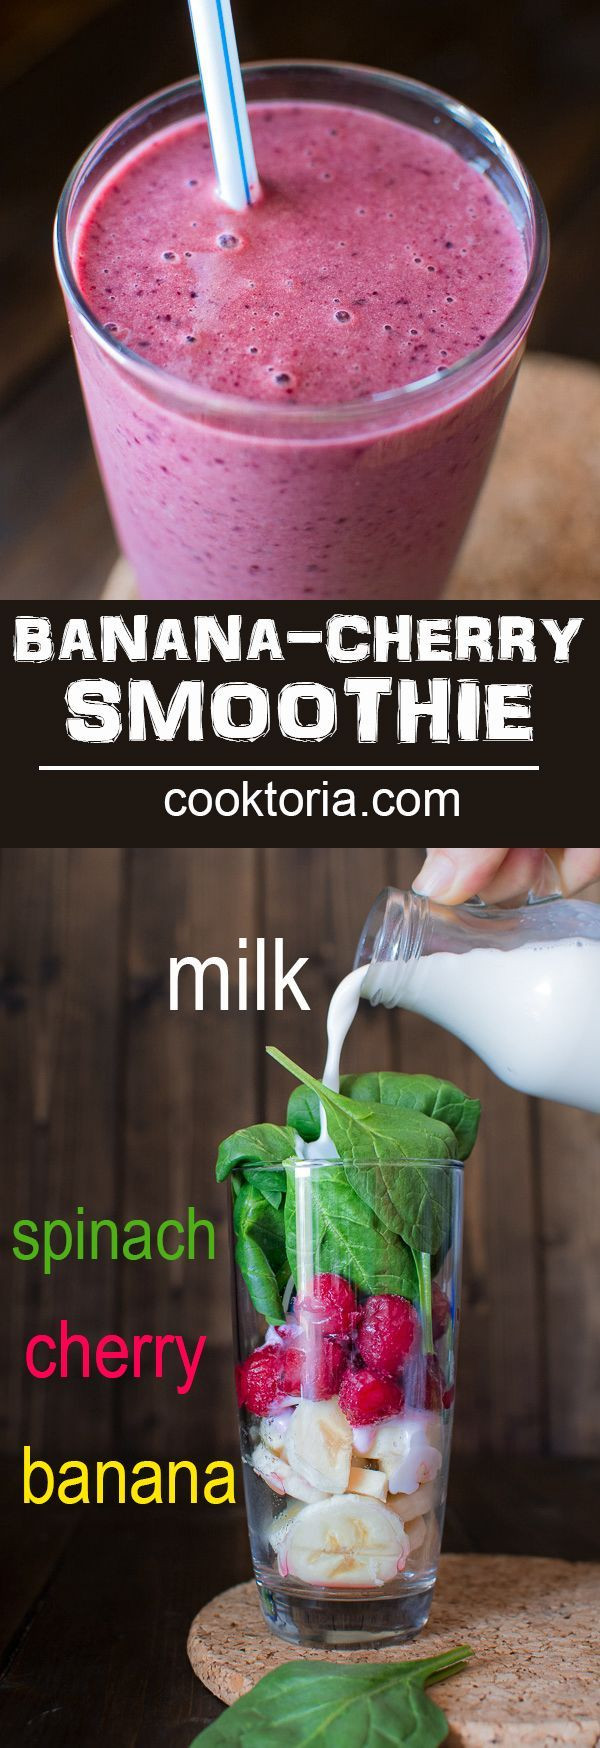 Healthy Smoothie Recipes With Yogurt
 Best 25 Cherry smoothie ideas on Pinterest